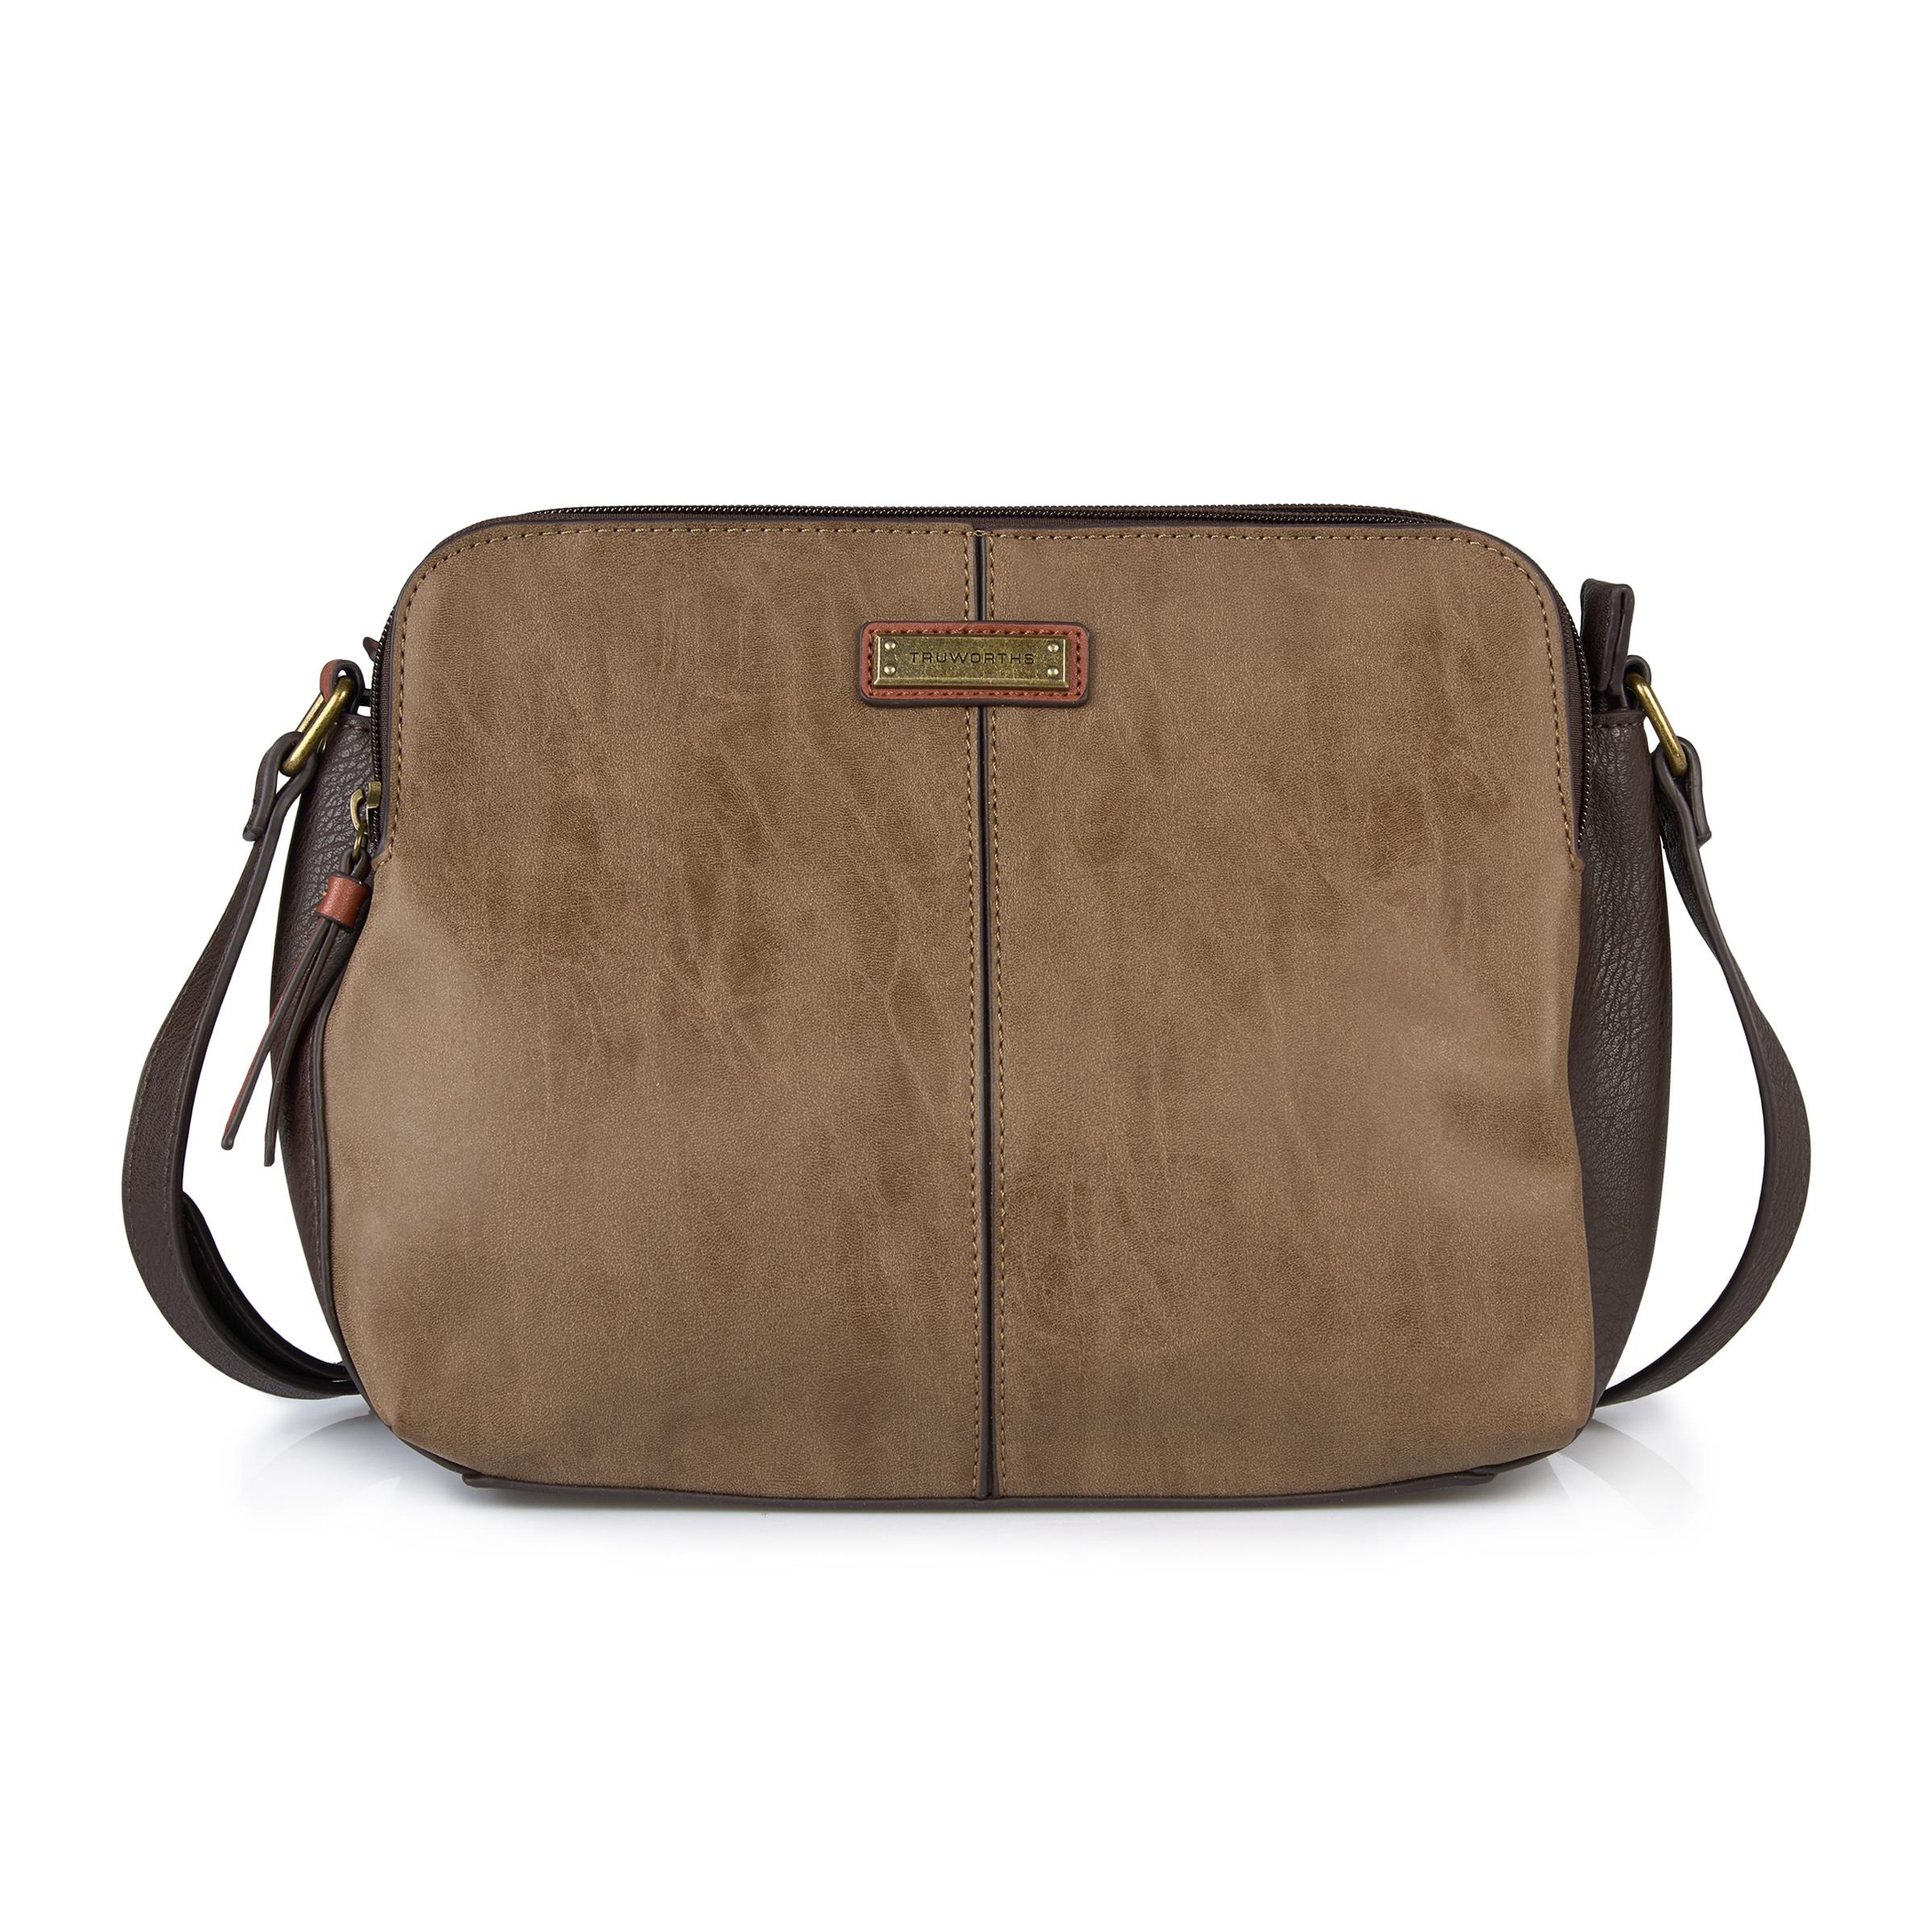 Ladies' Bags | Shop Online at Truworths